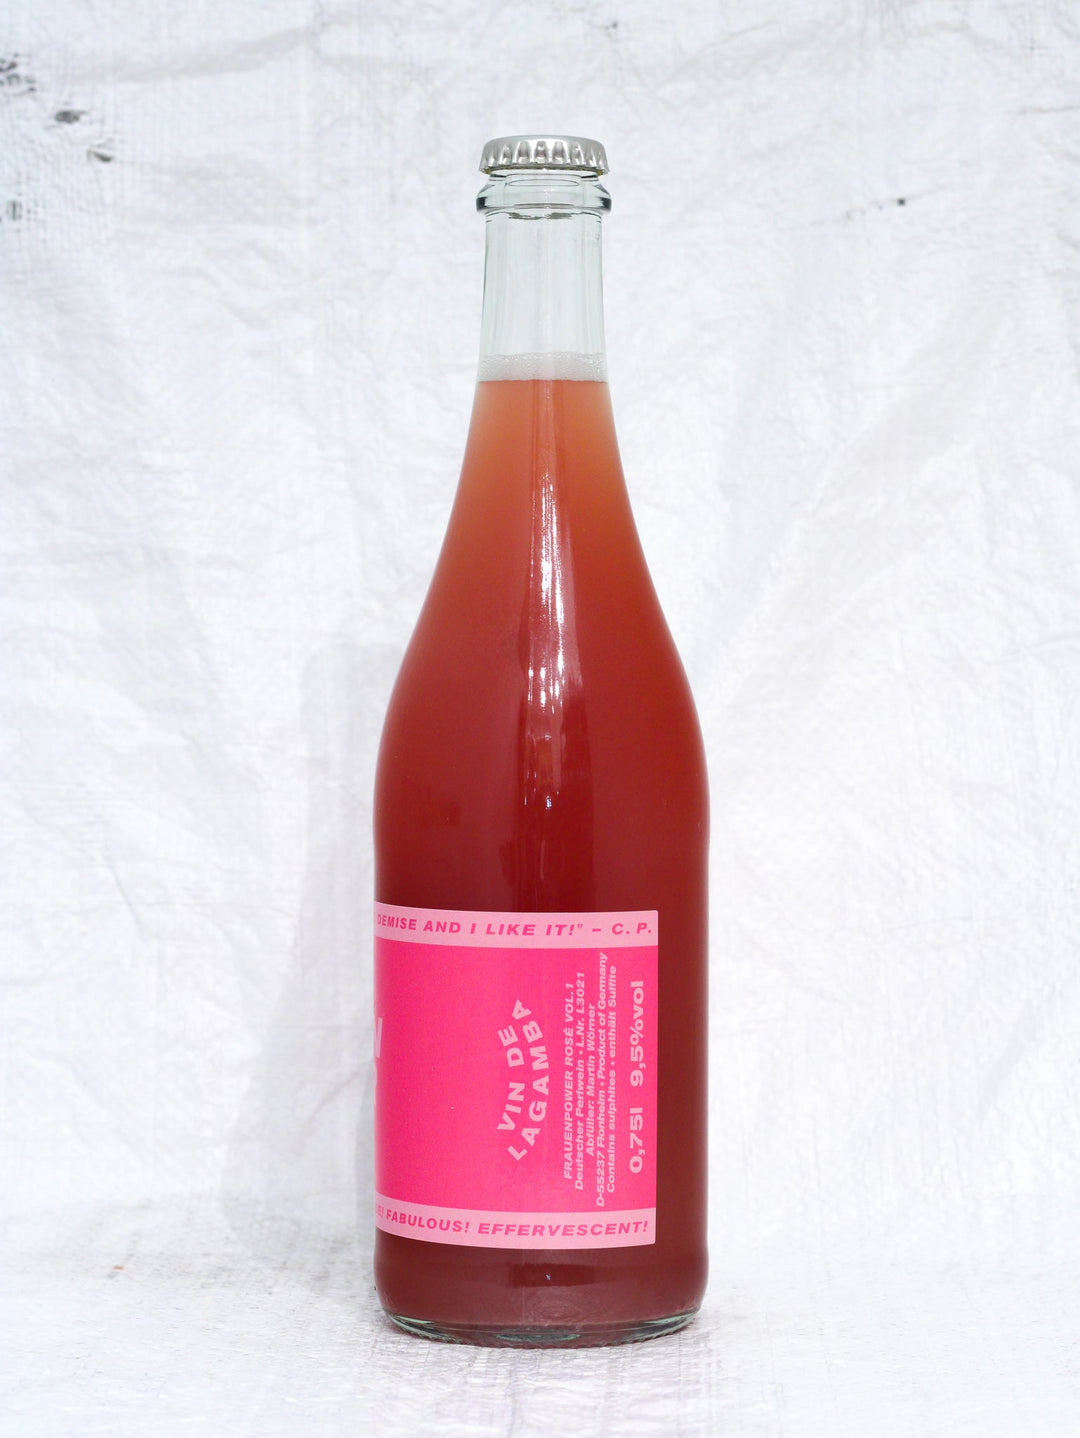 Vin de LaGamba Frauenpower Rosé 1